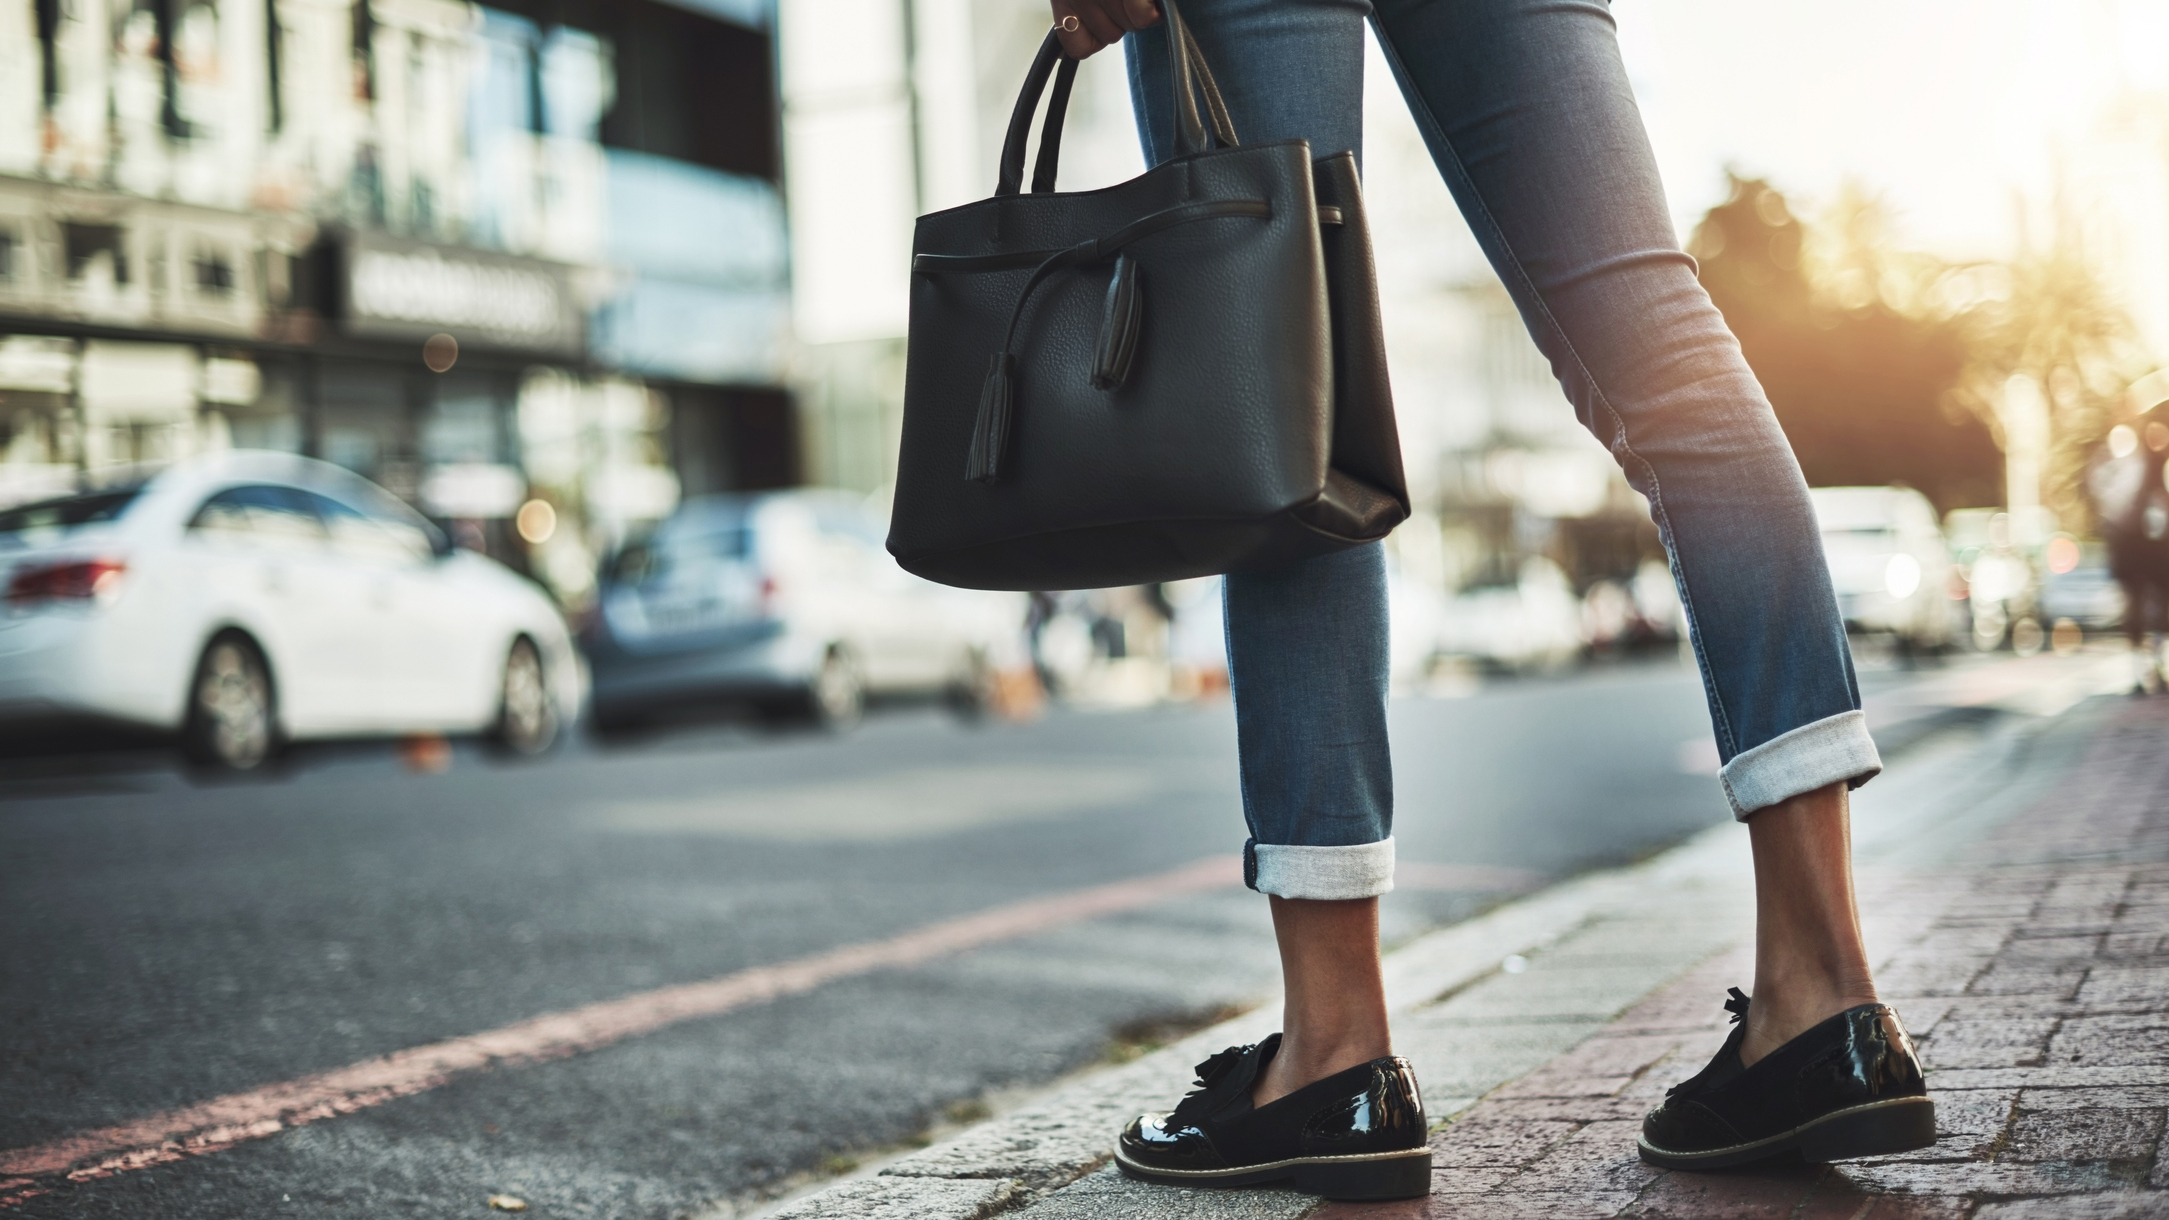 Women holding a black bag crossing a street